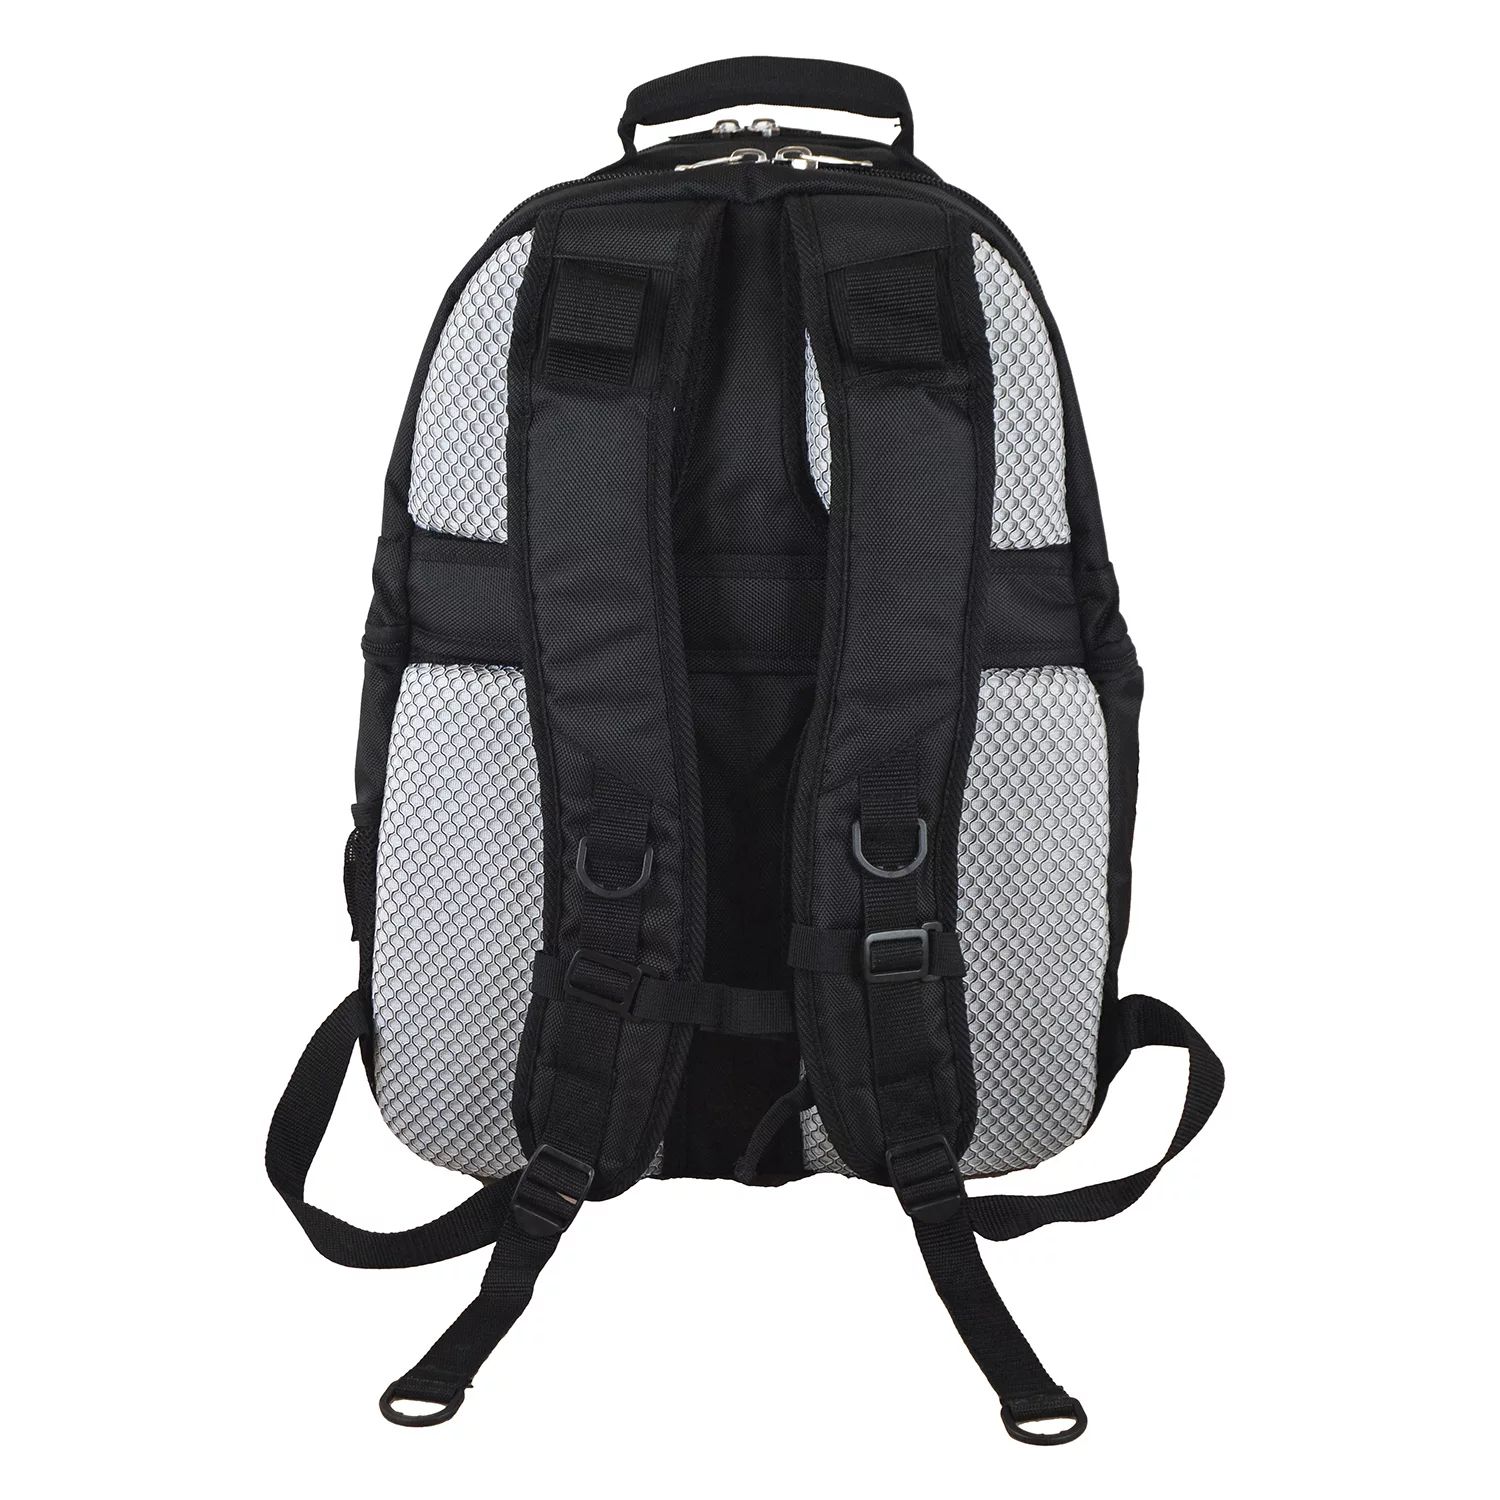 Рюкзак для ноутбука премиум-класса BYU Cougars